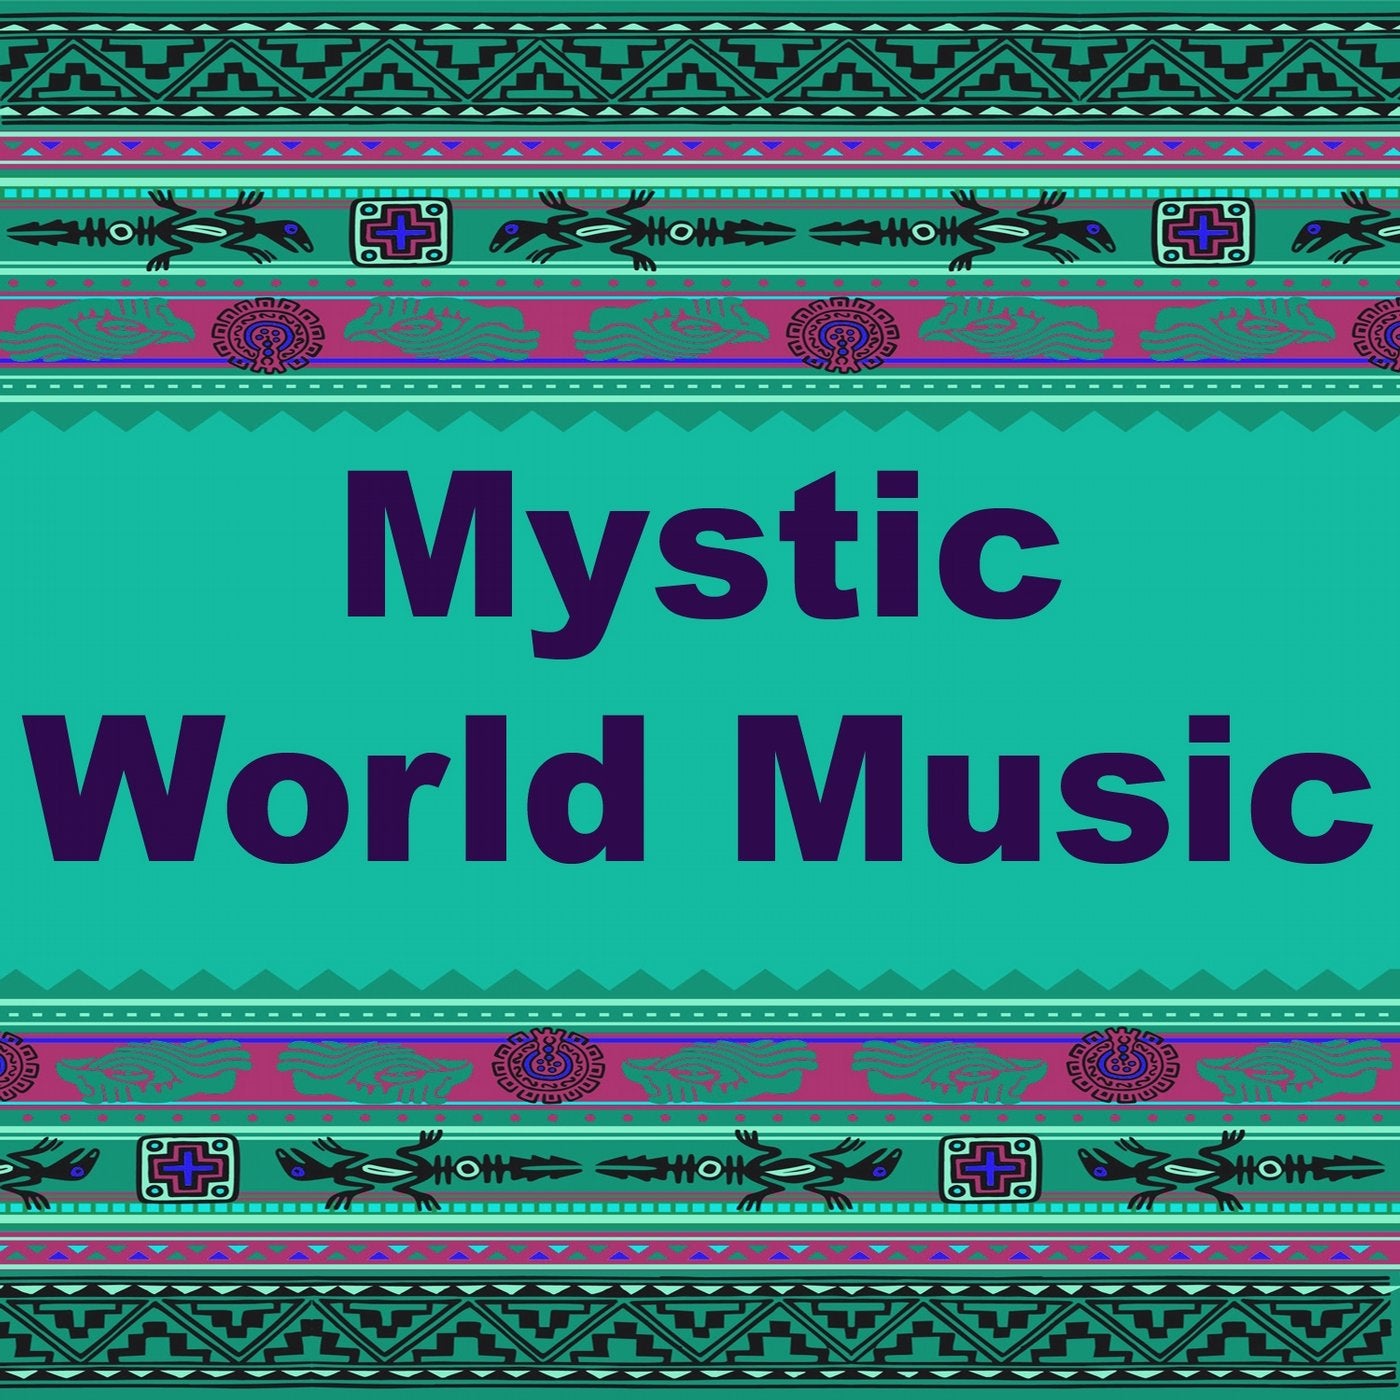 Mystic World Music